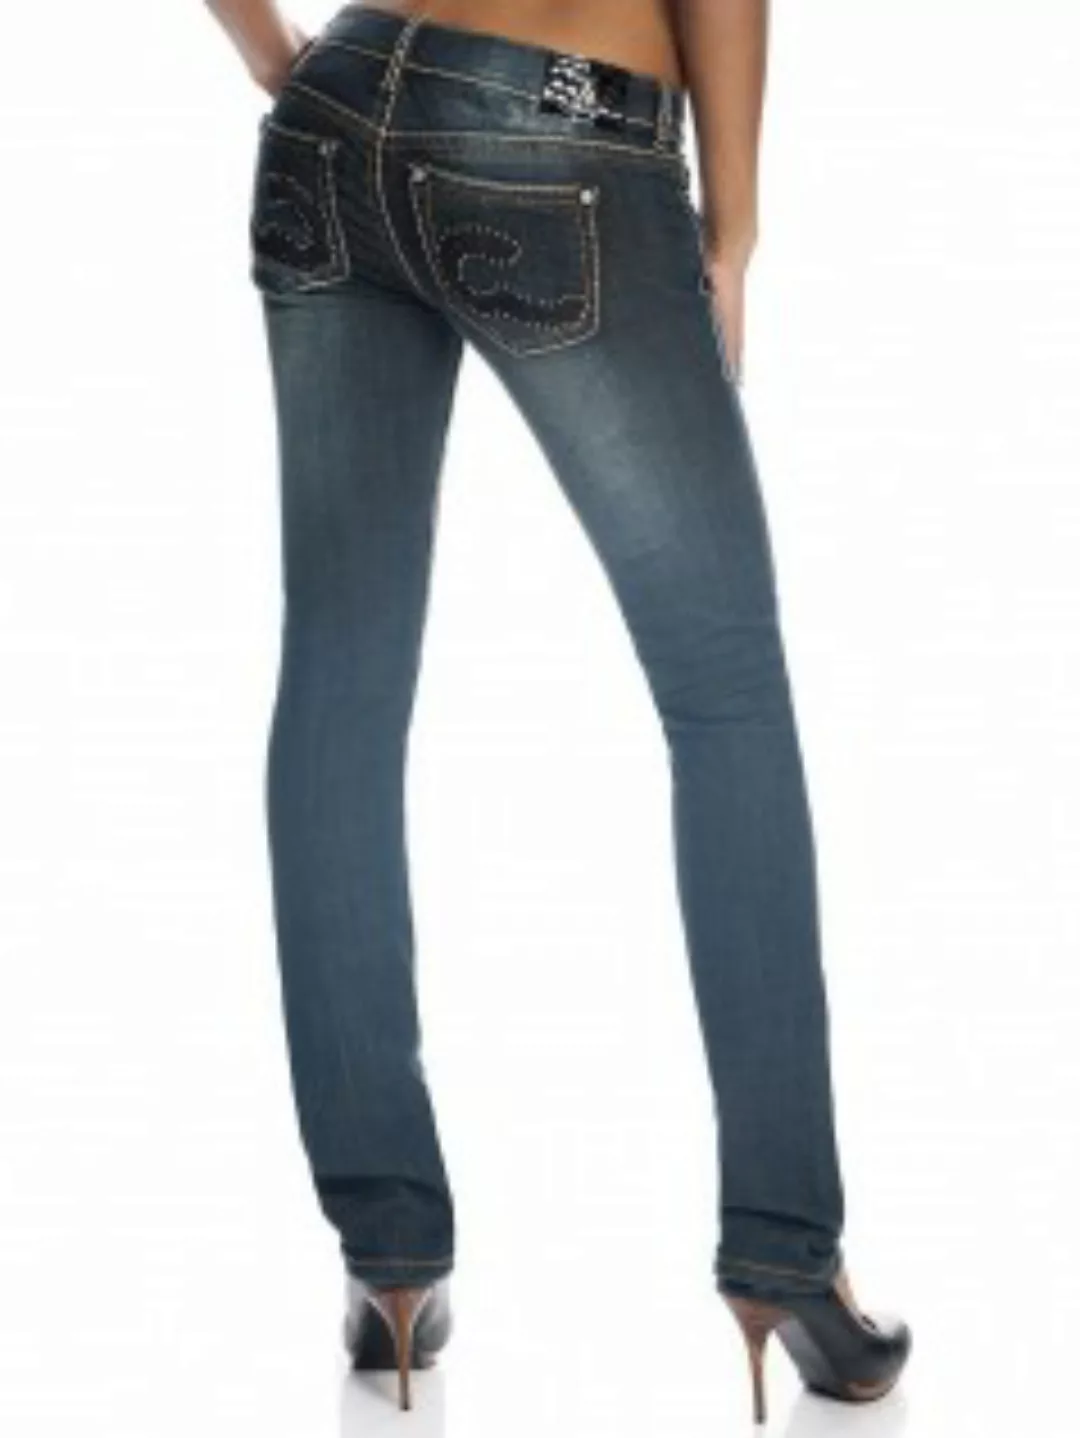 Antique Rivet Damen Studded Jeans Charlotte (26) günstig online kaufen